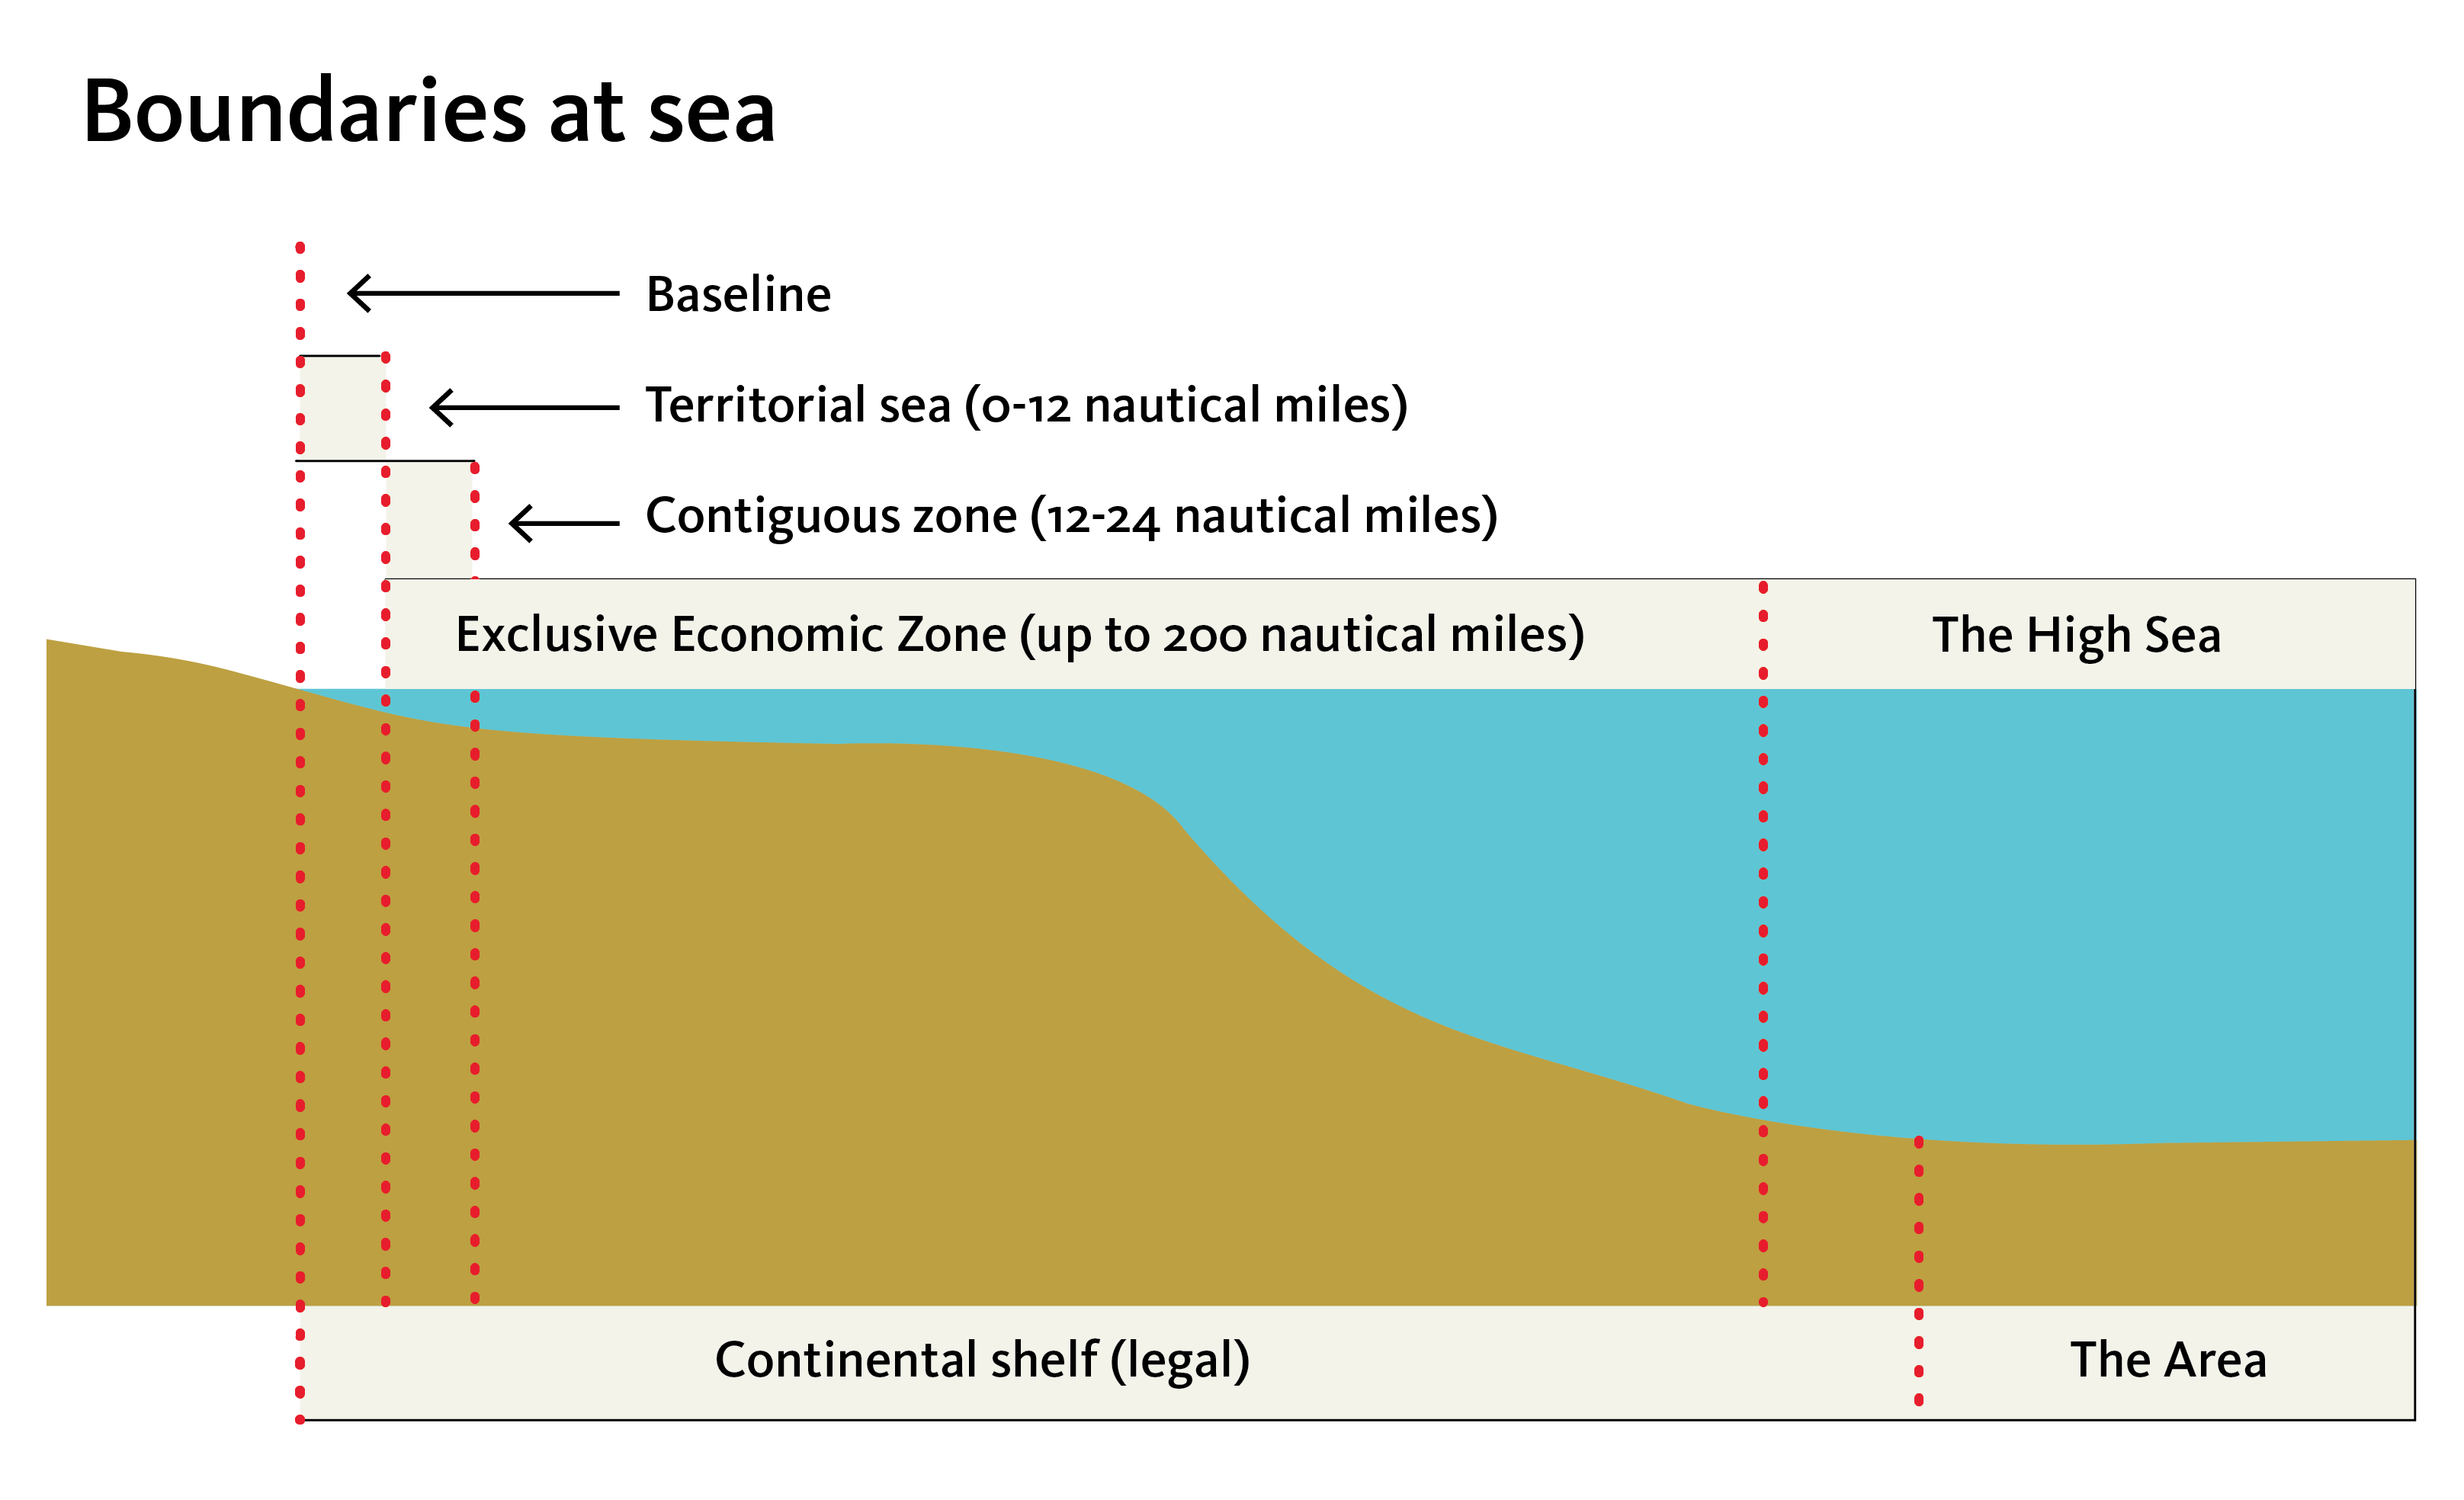 Illustration ekplaining how boundaries at sea are drawn up